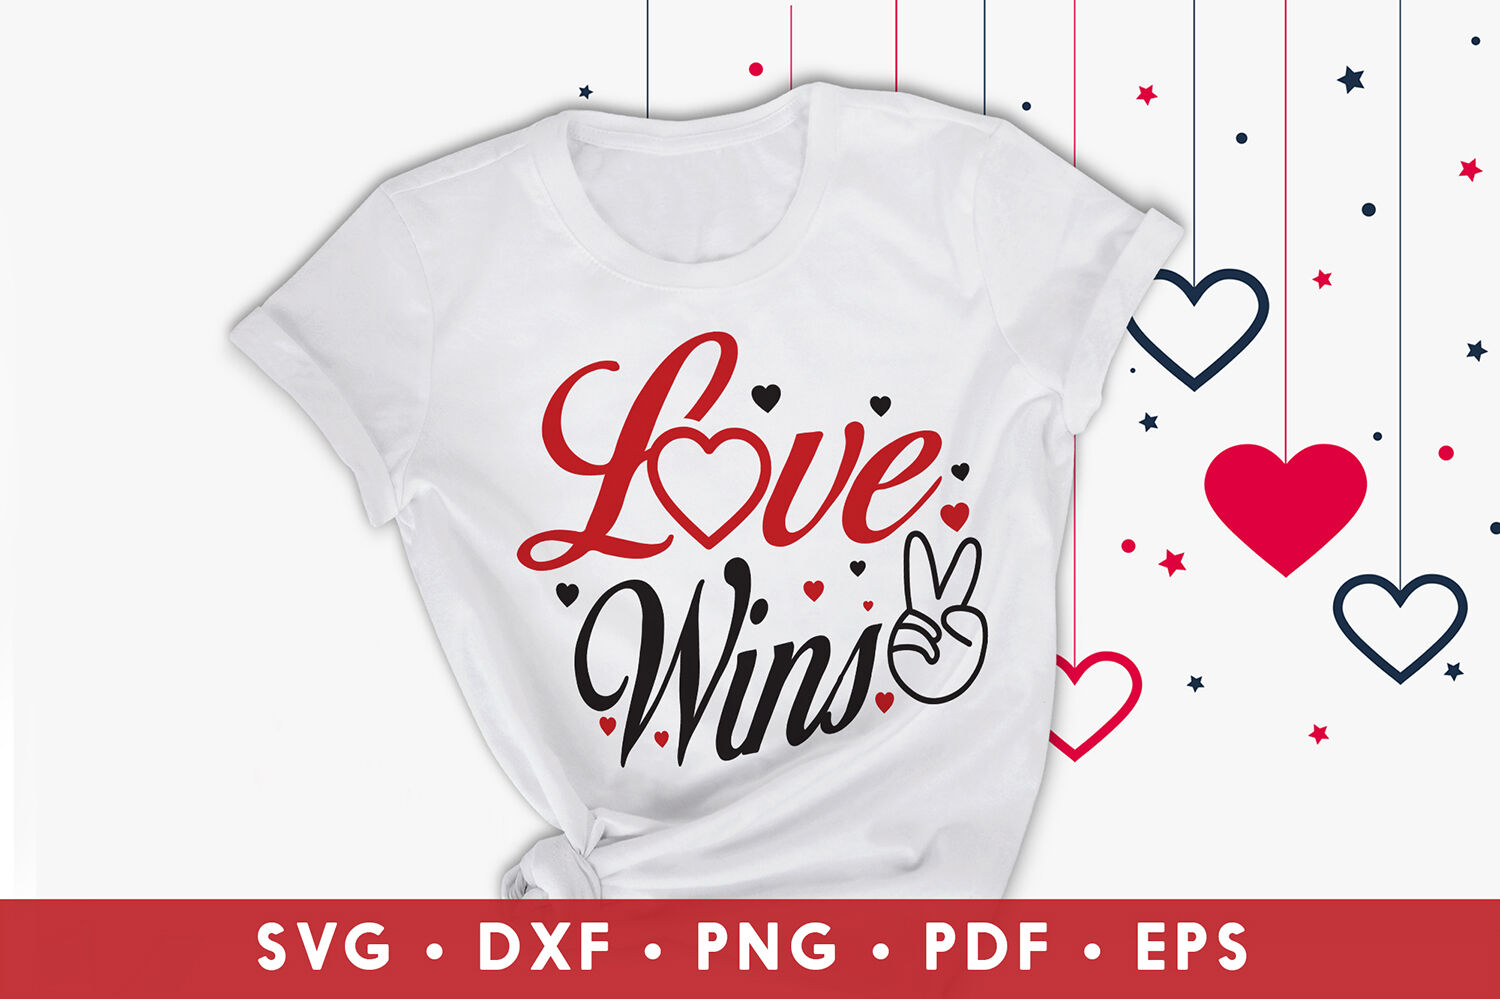 Download Love Wins Valentines Day Svg Valentine Svg Cut File By Craftlabsvg Thehungryjpeg Com